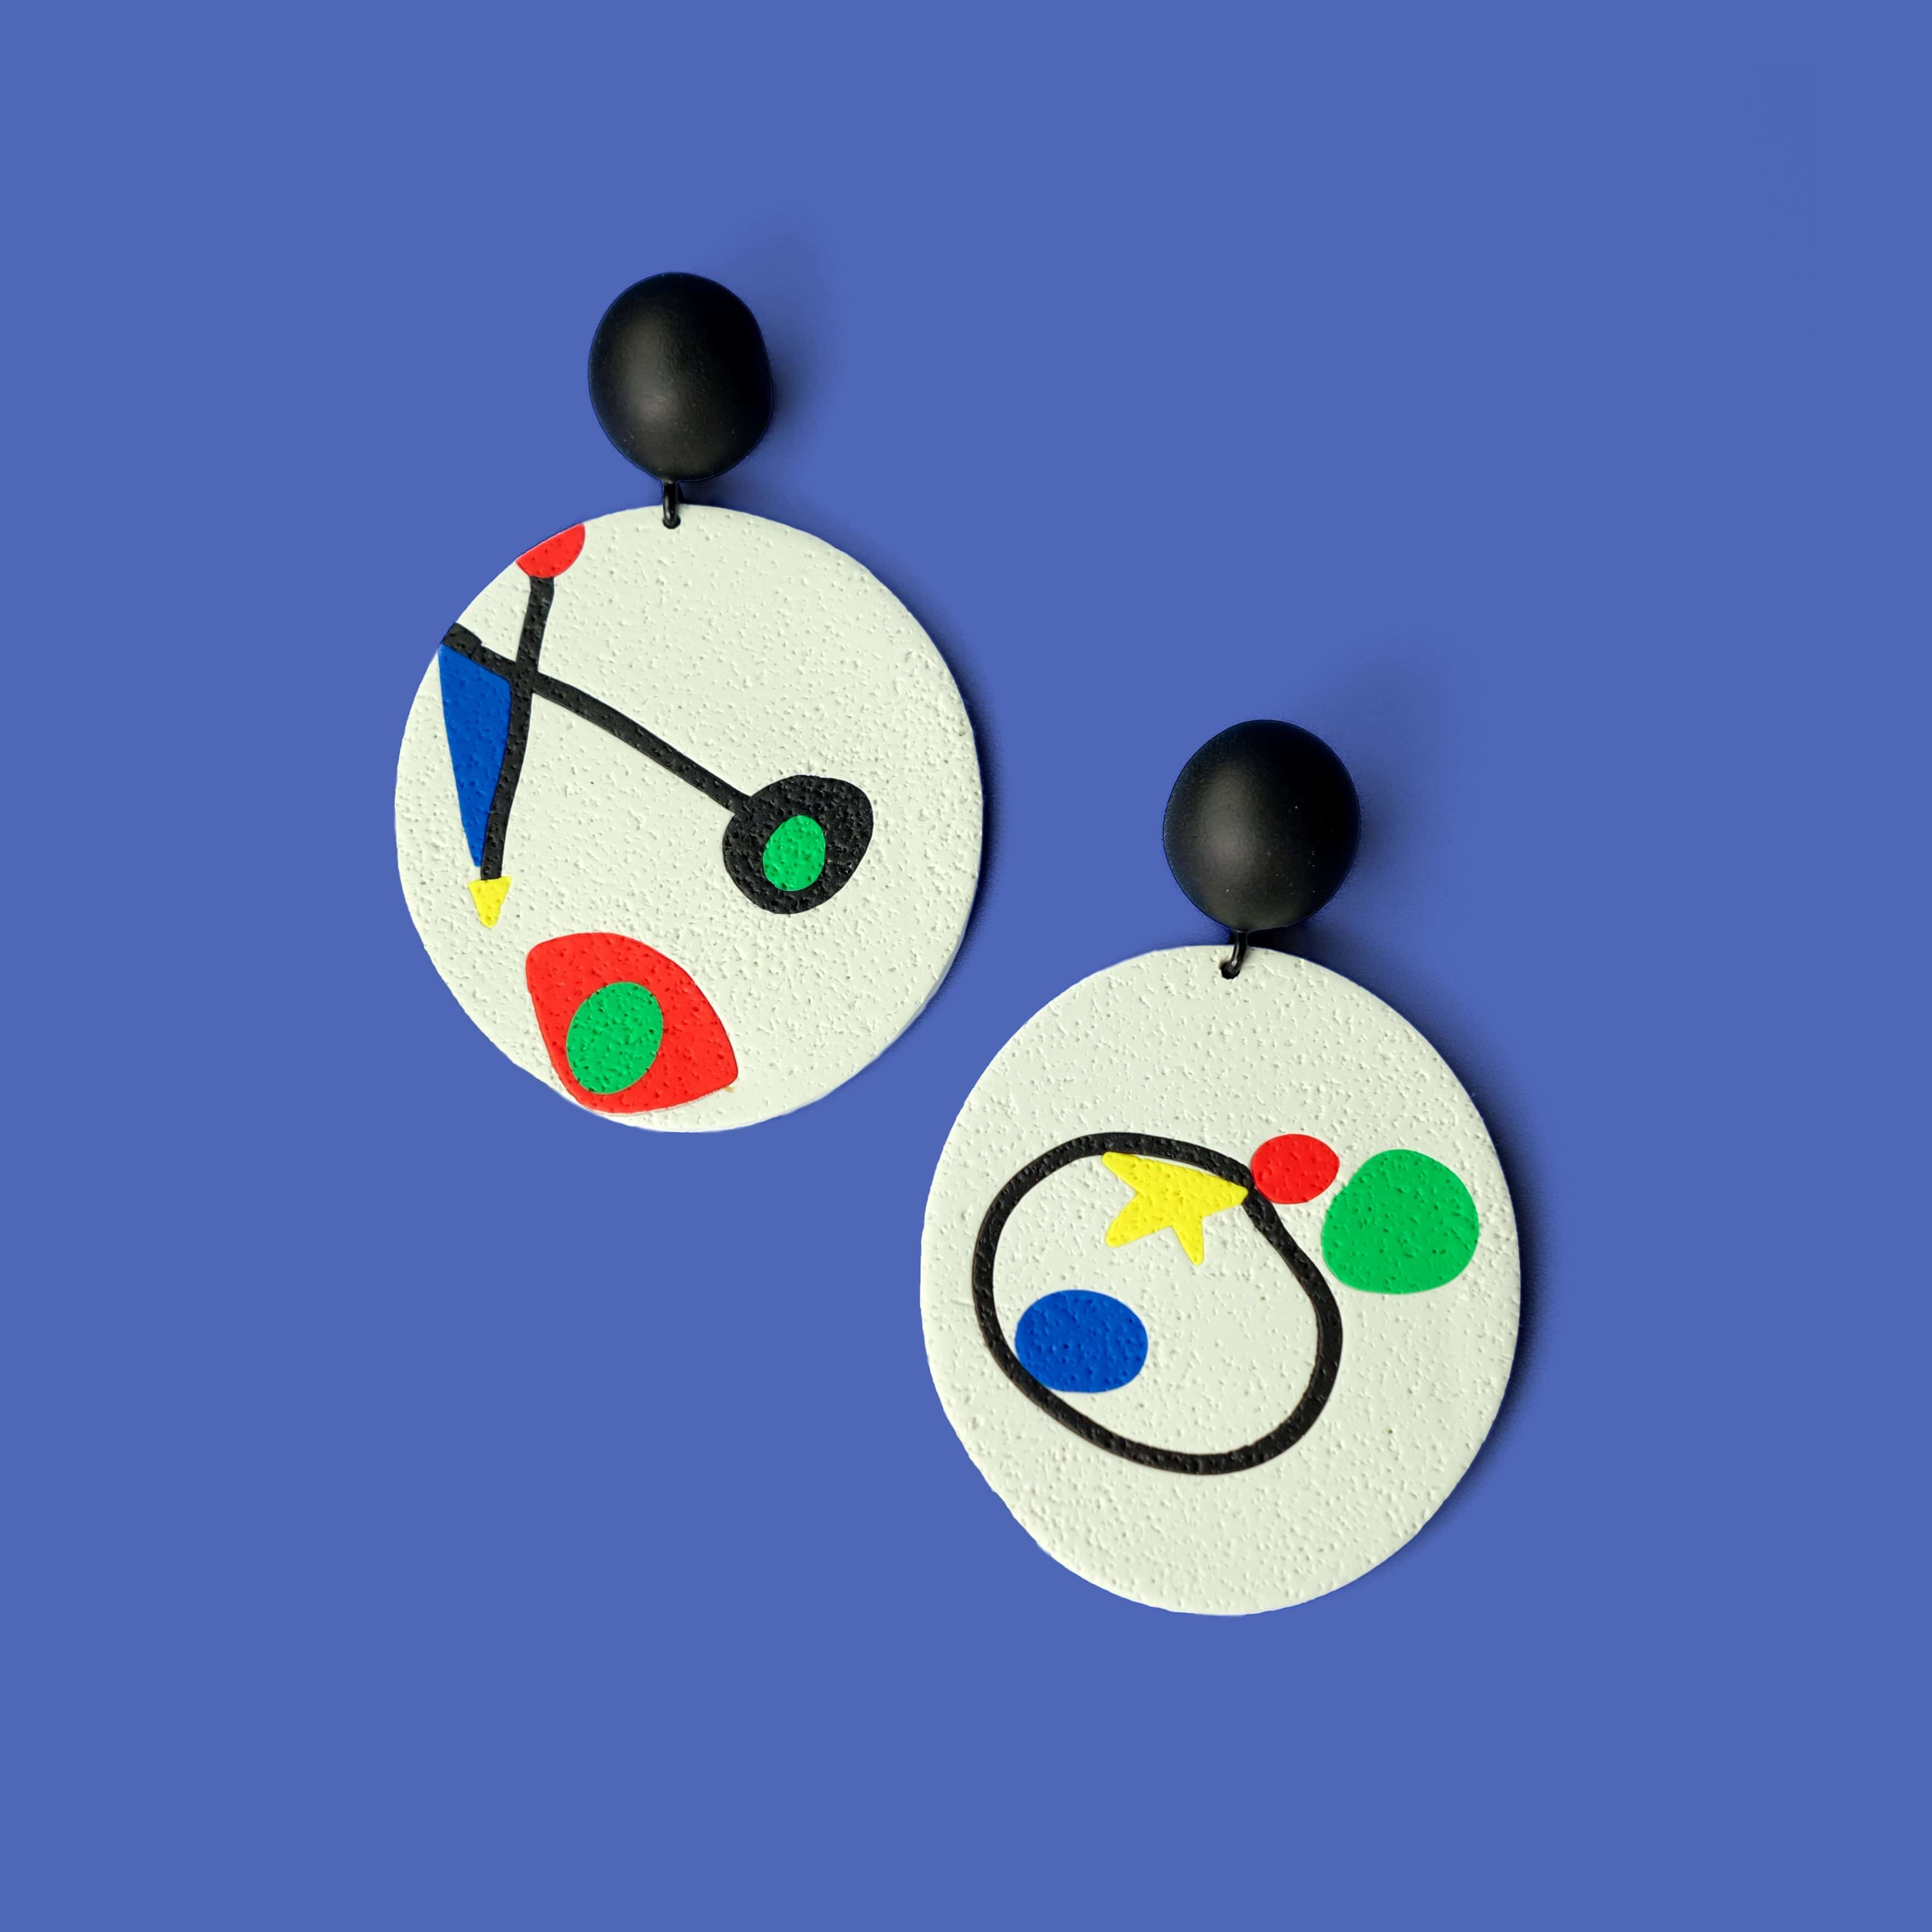 Miro artwork inspired statement earrings